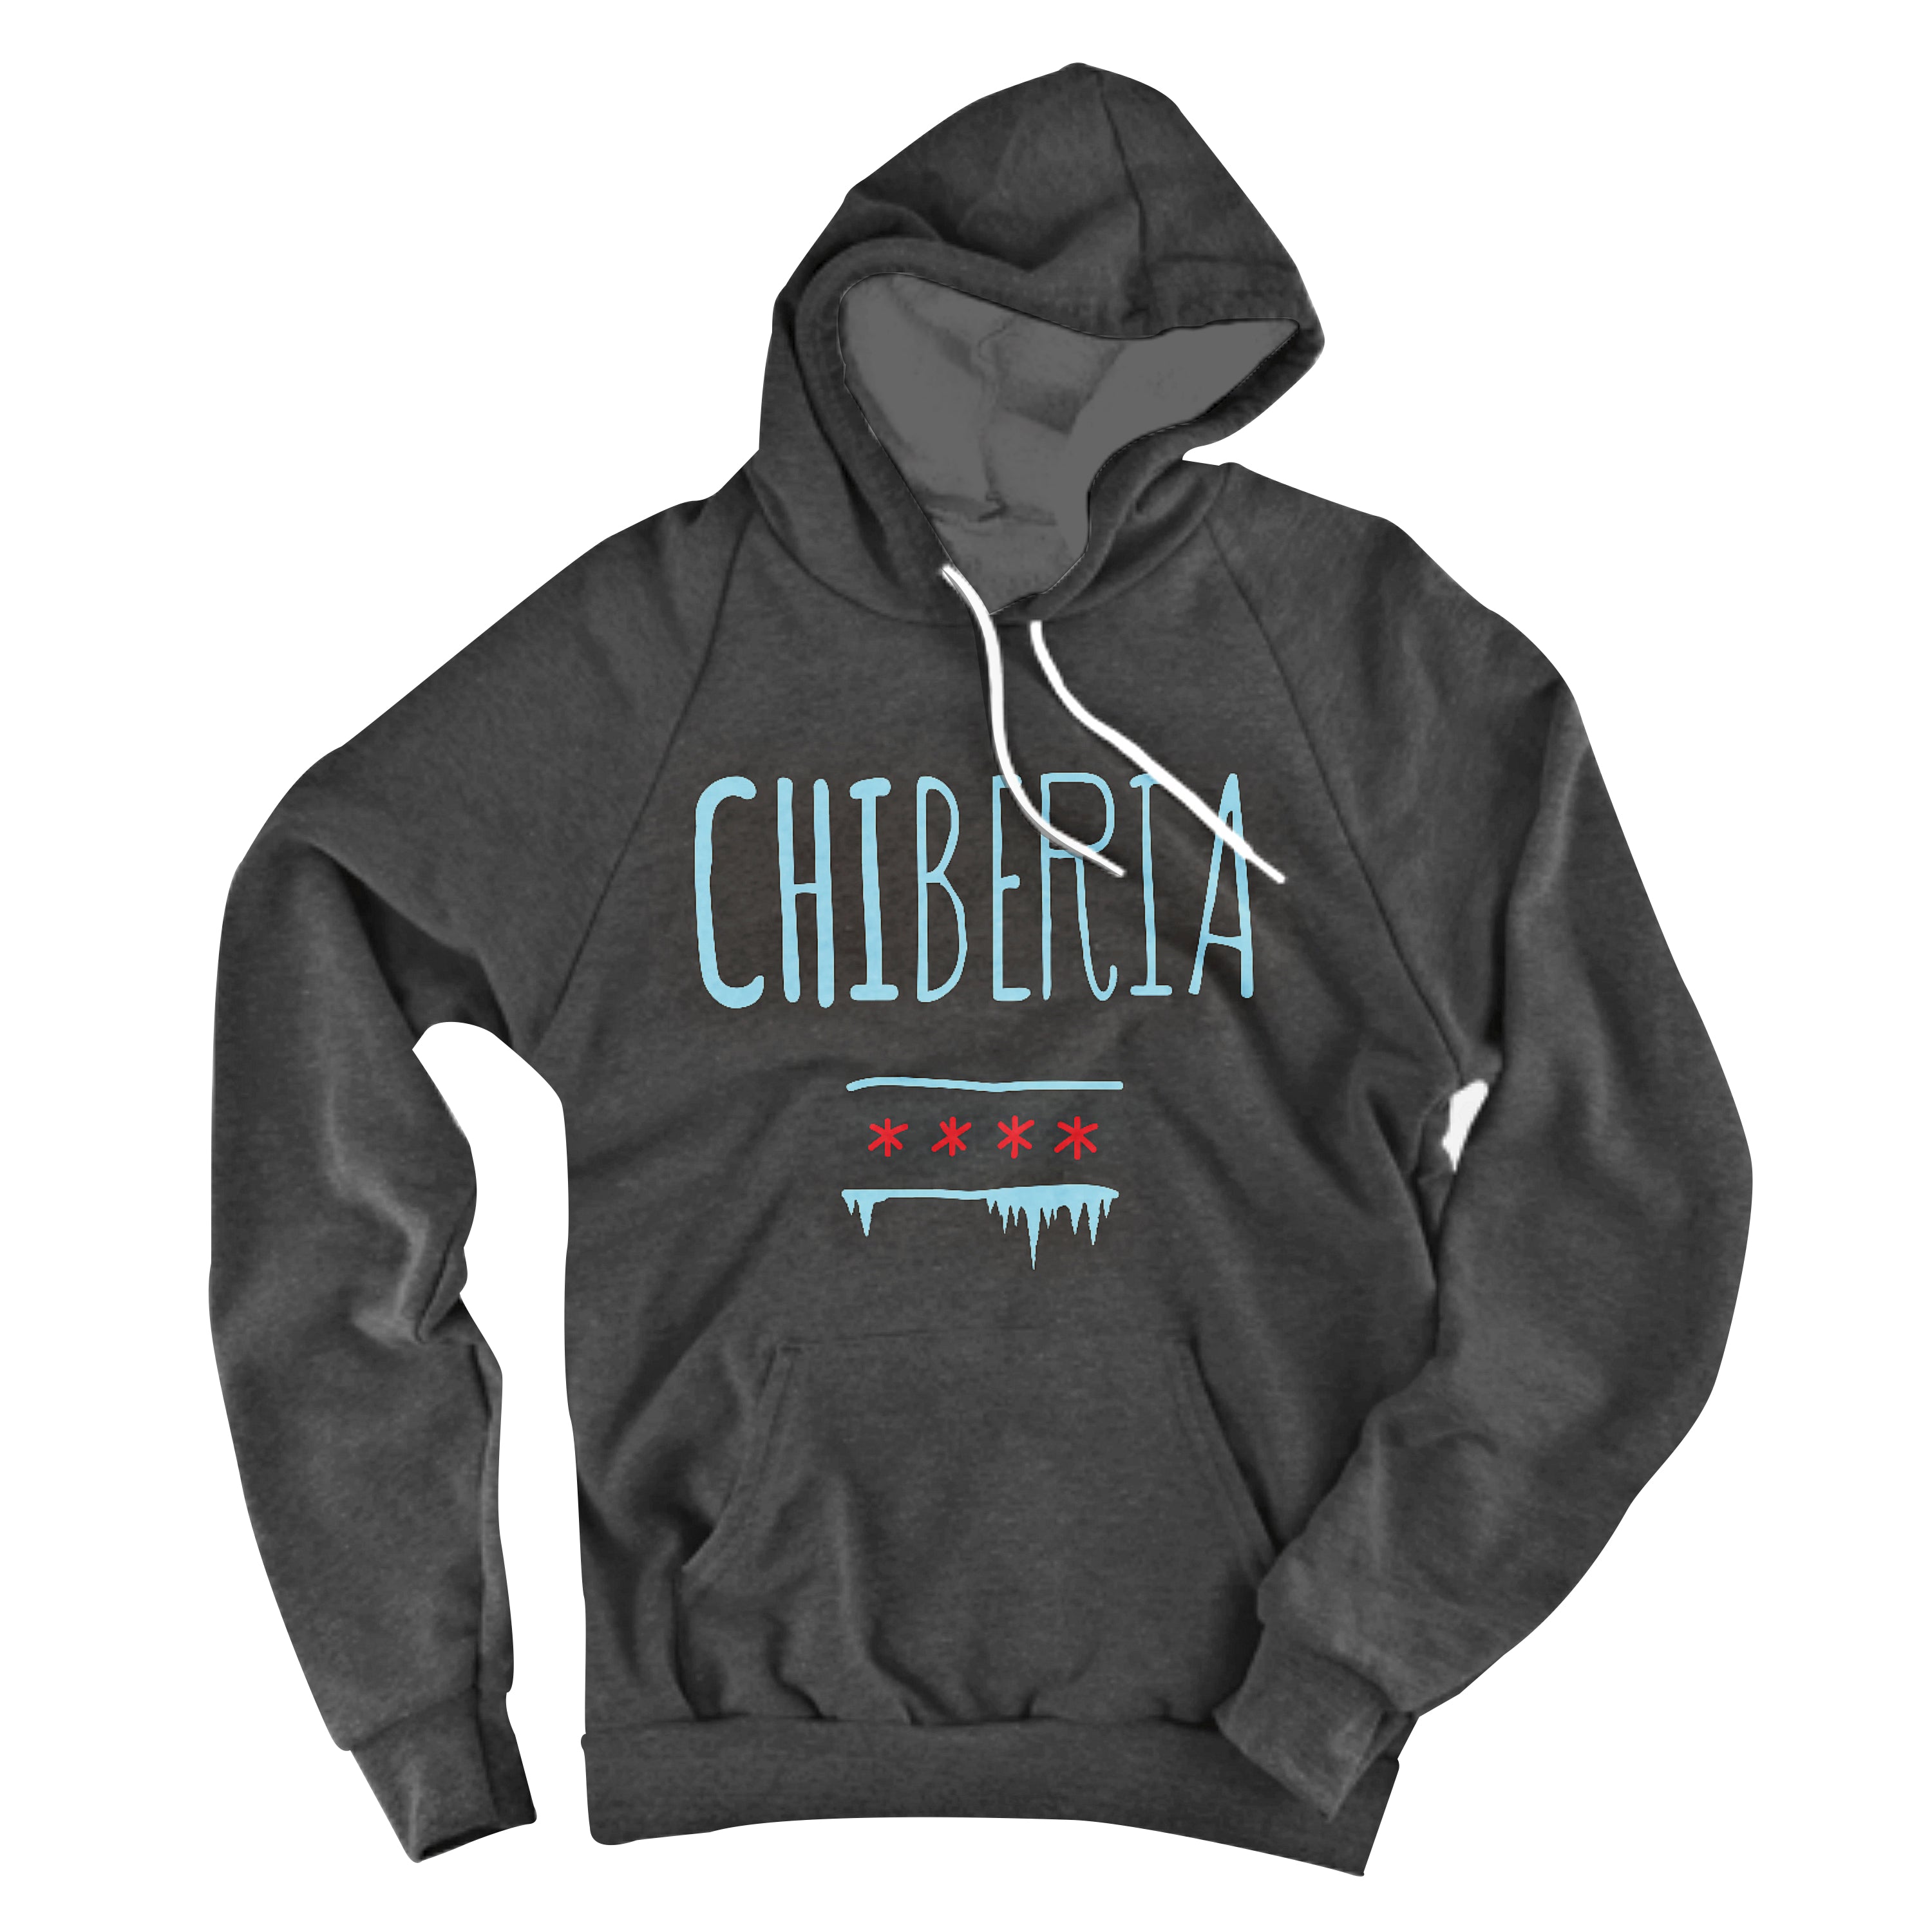 Chiberia Chicago Hoodie